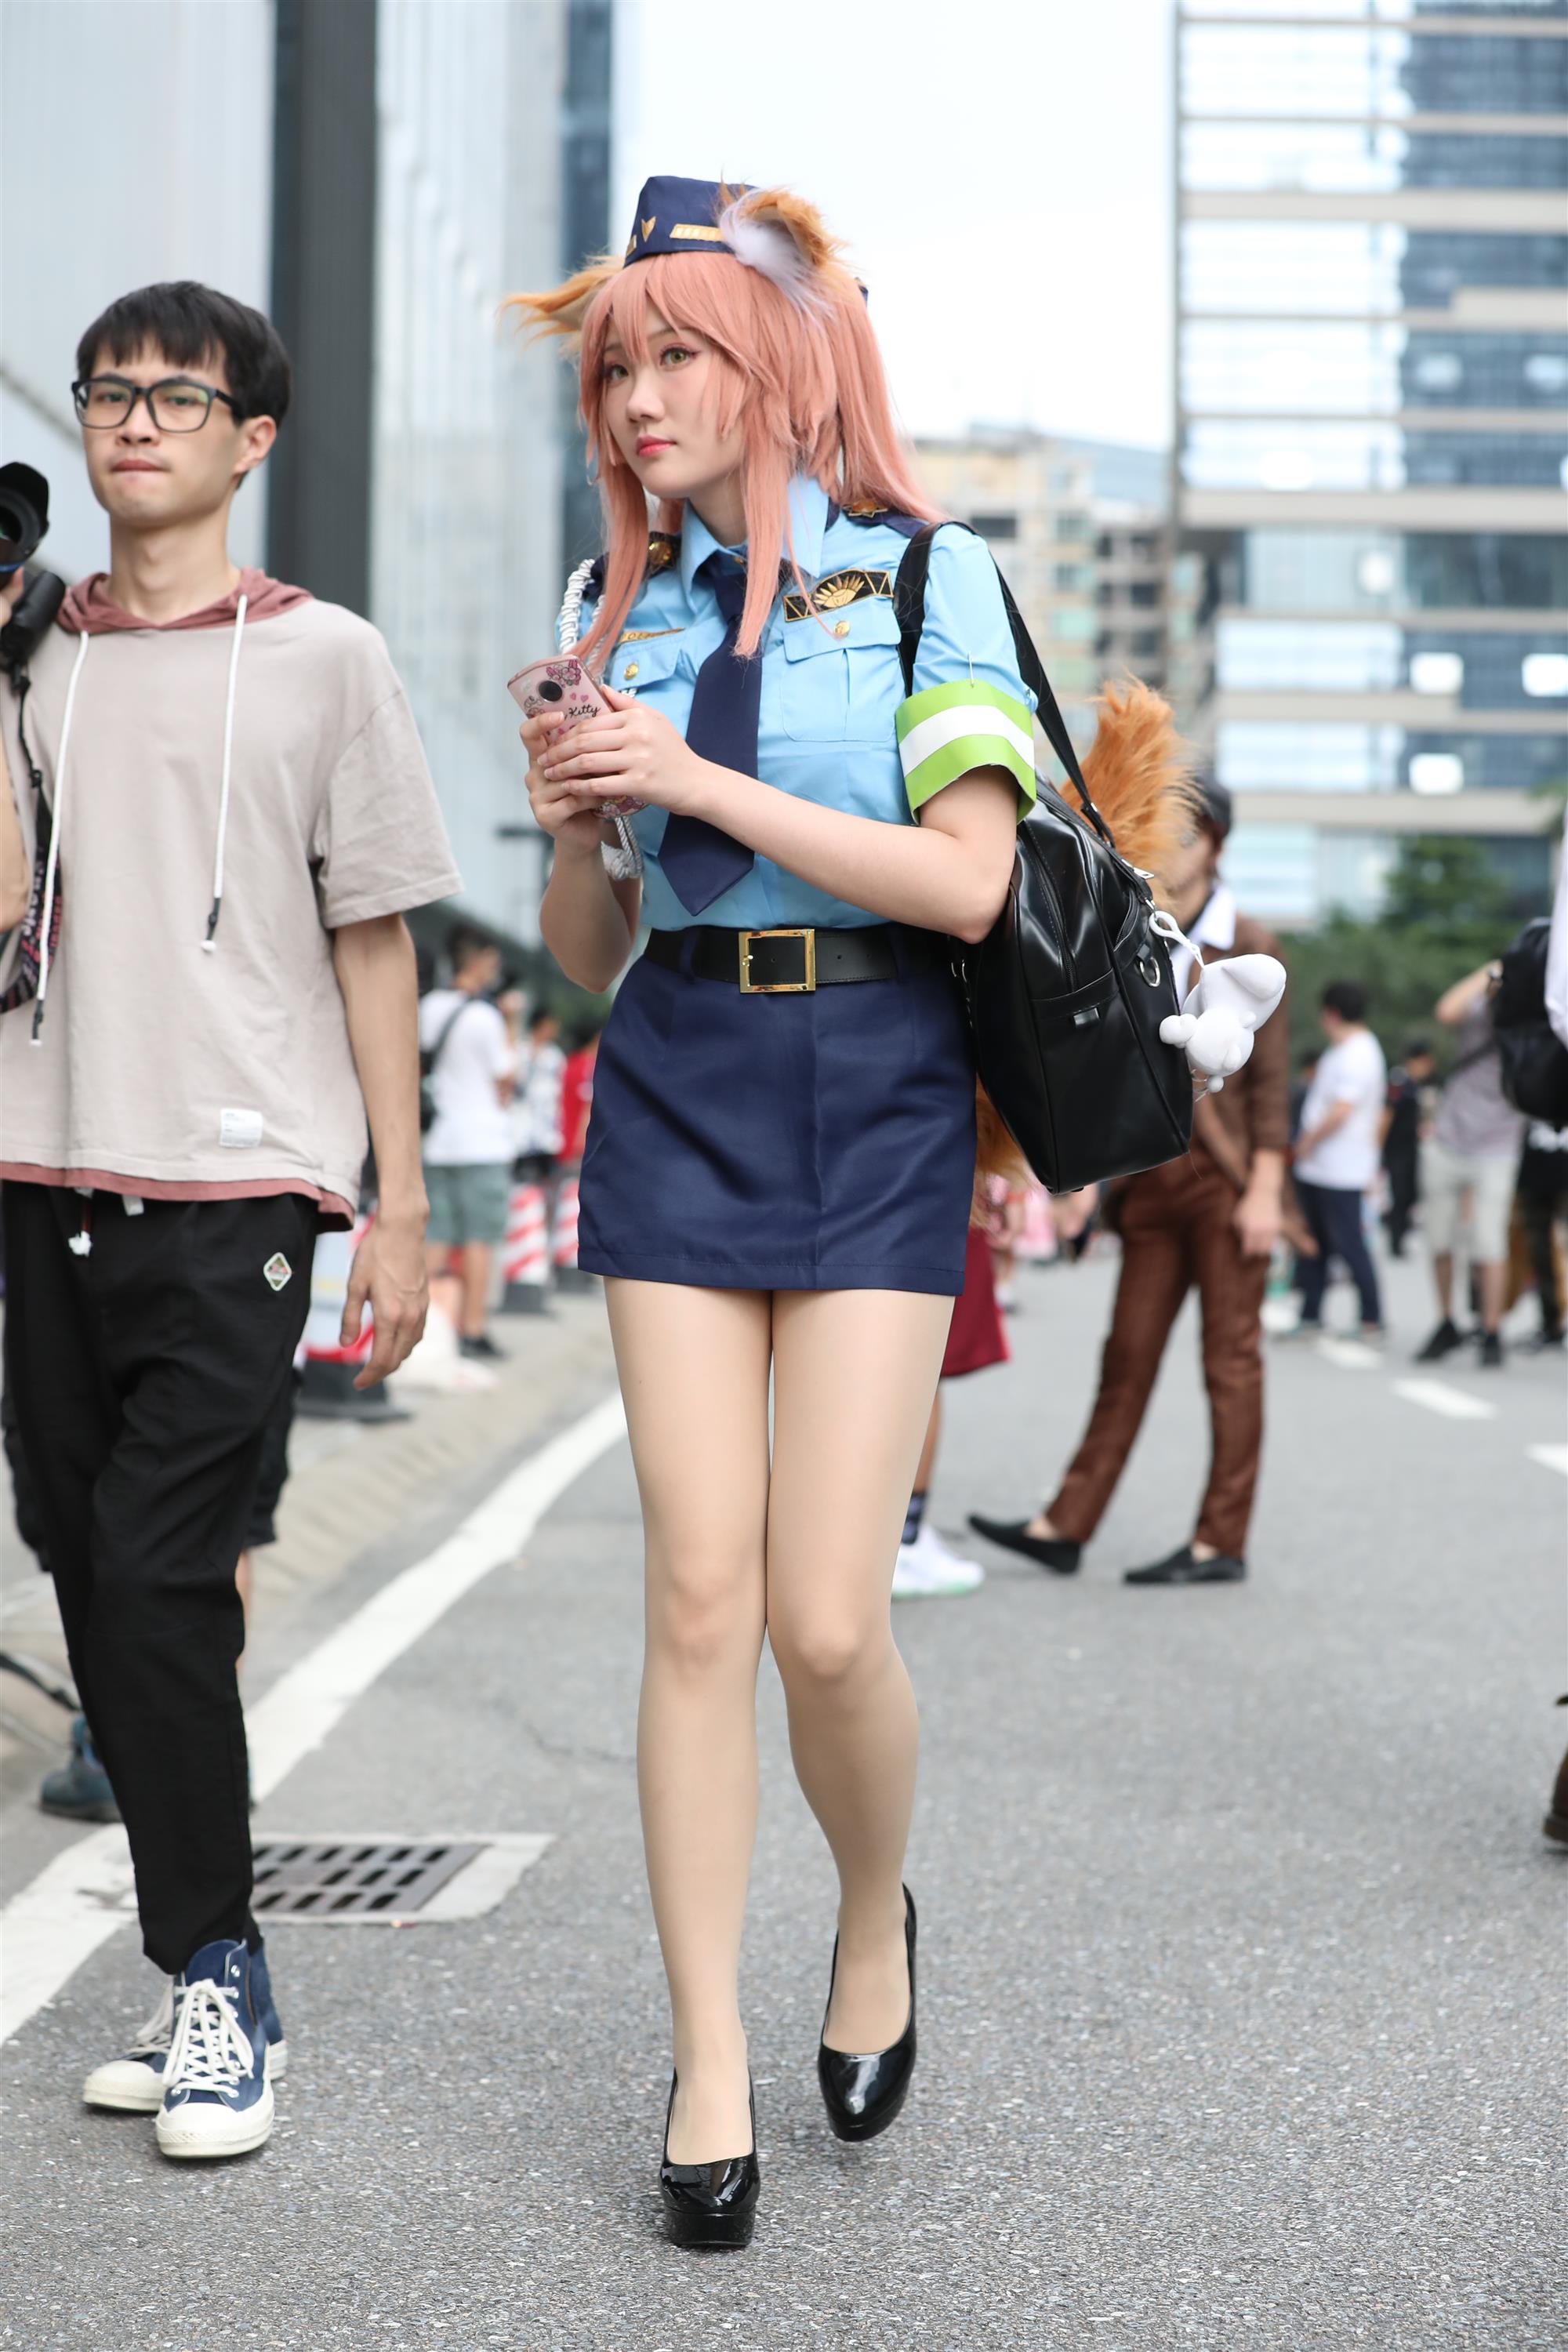 Street cosplay girl - 22.jpg